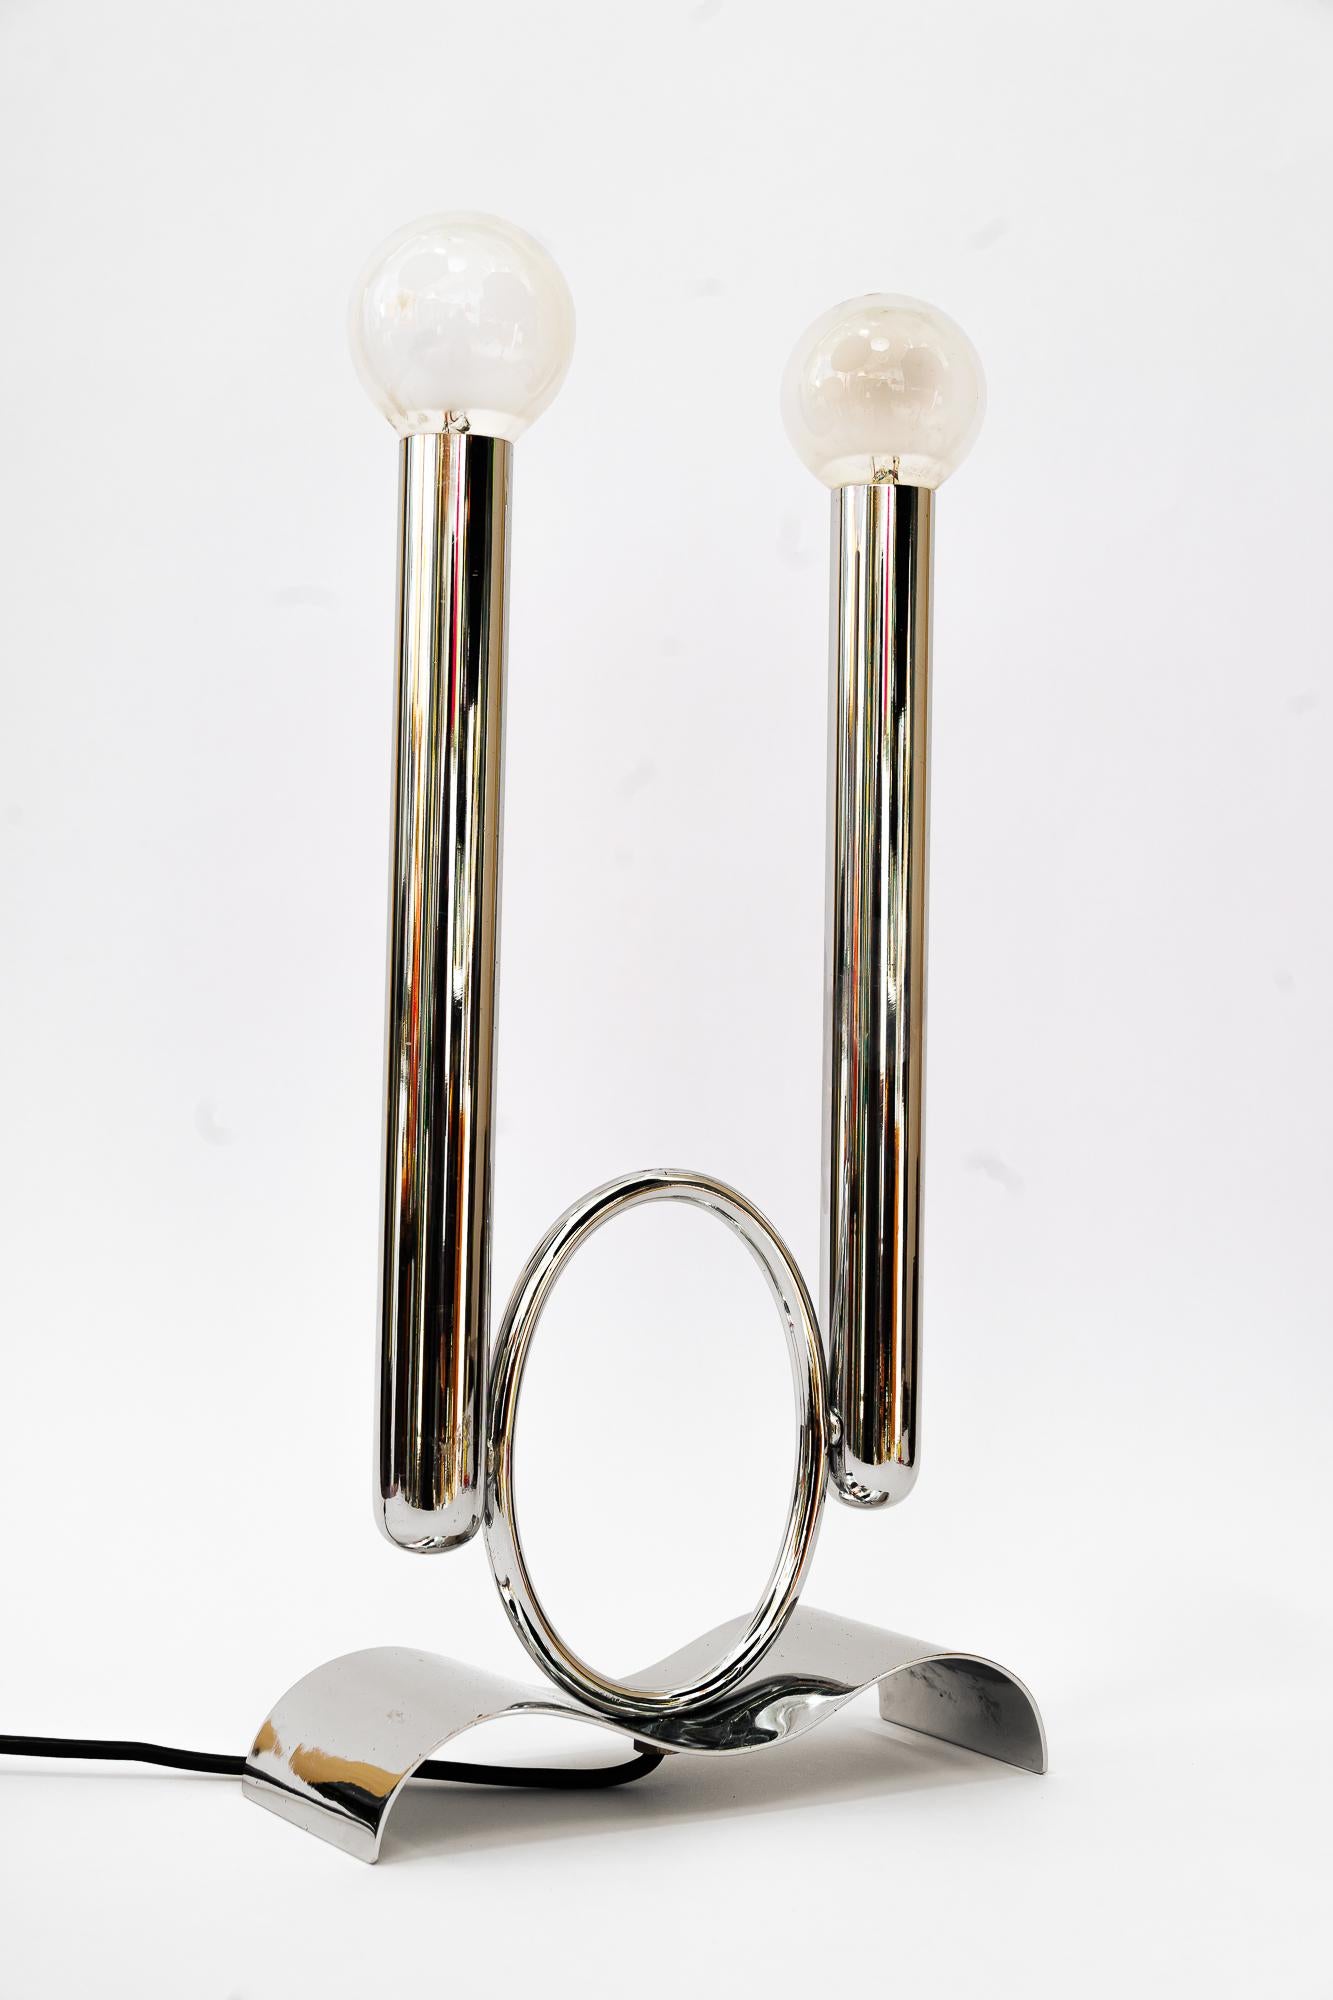 Art Deco chrme table lamp vienna around 1920s
Rare model
Original condition
Brass chromed.